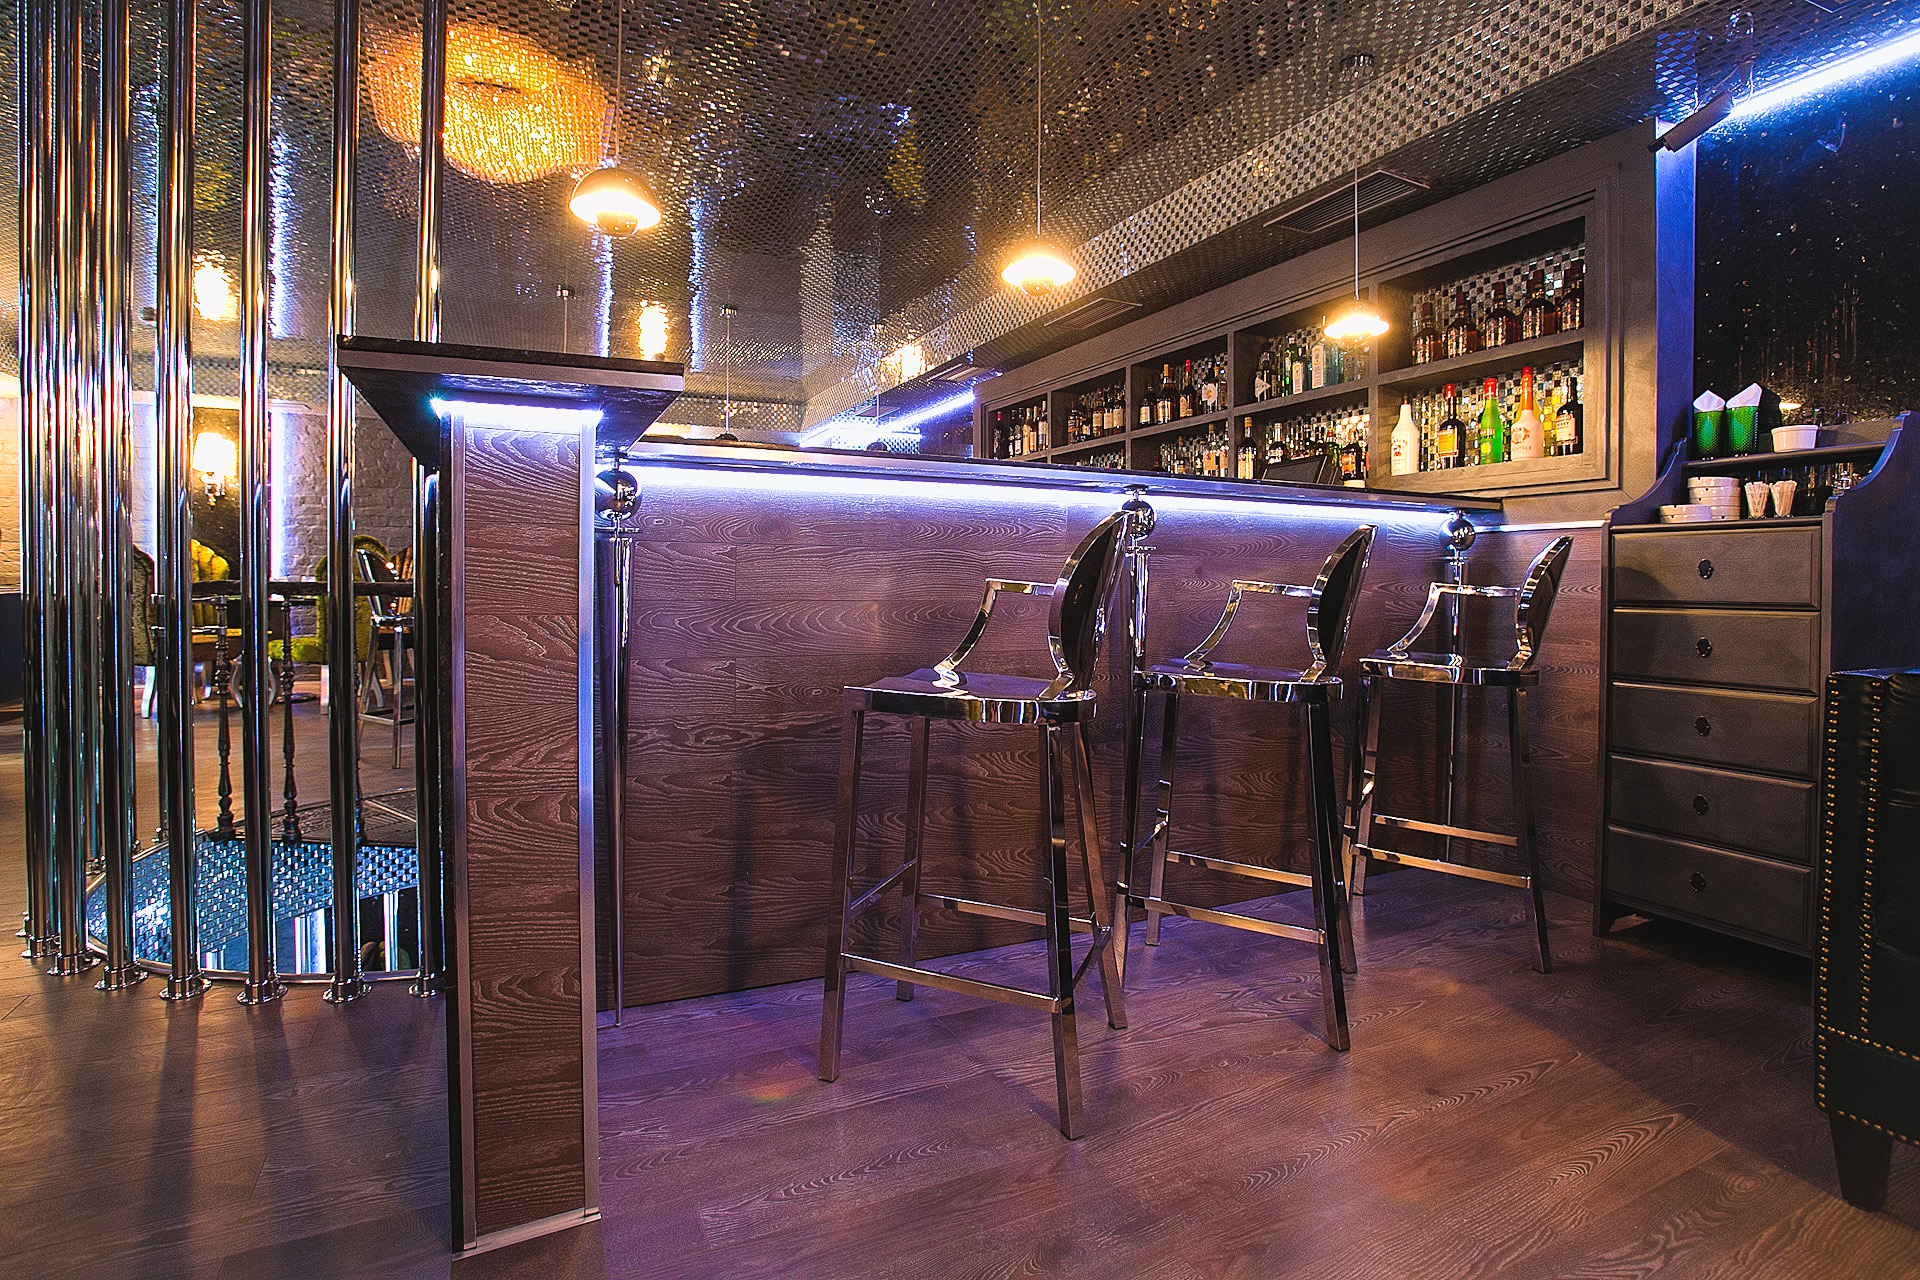 The bar москва